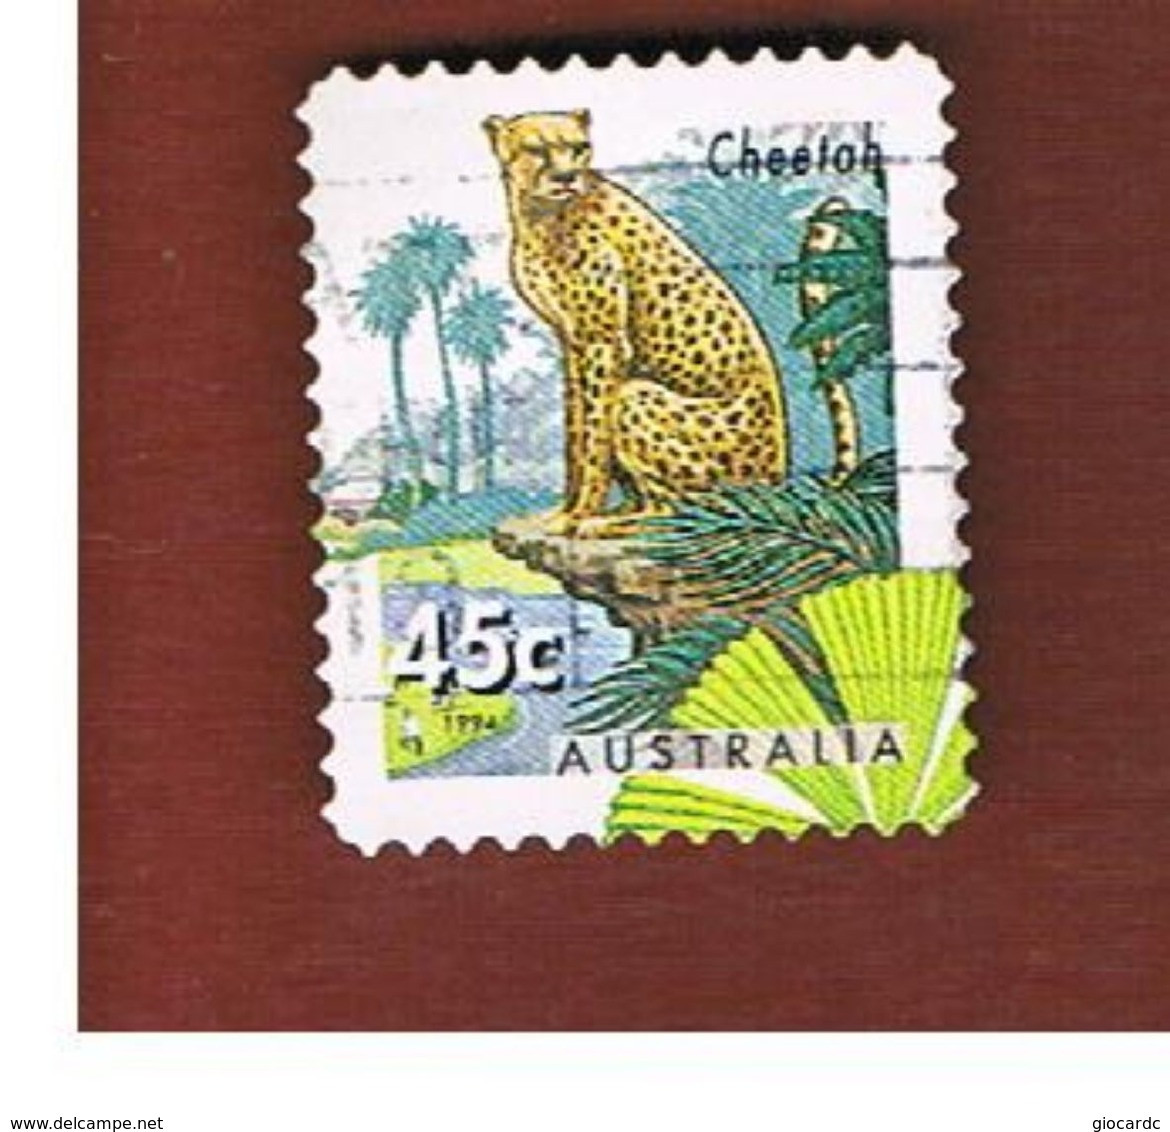 AUSTRALIA  -  SG 1486  -      1994  ANIMALS: CHEETAH   -       USED - Usados